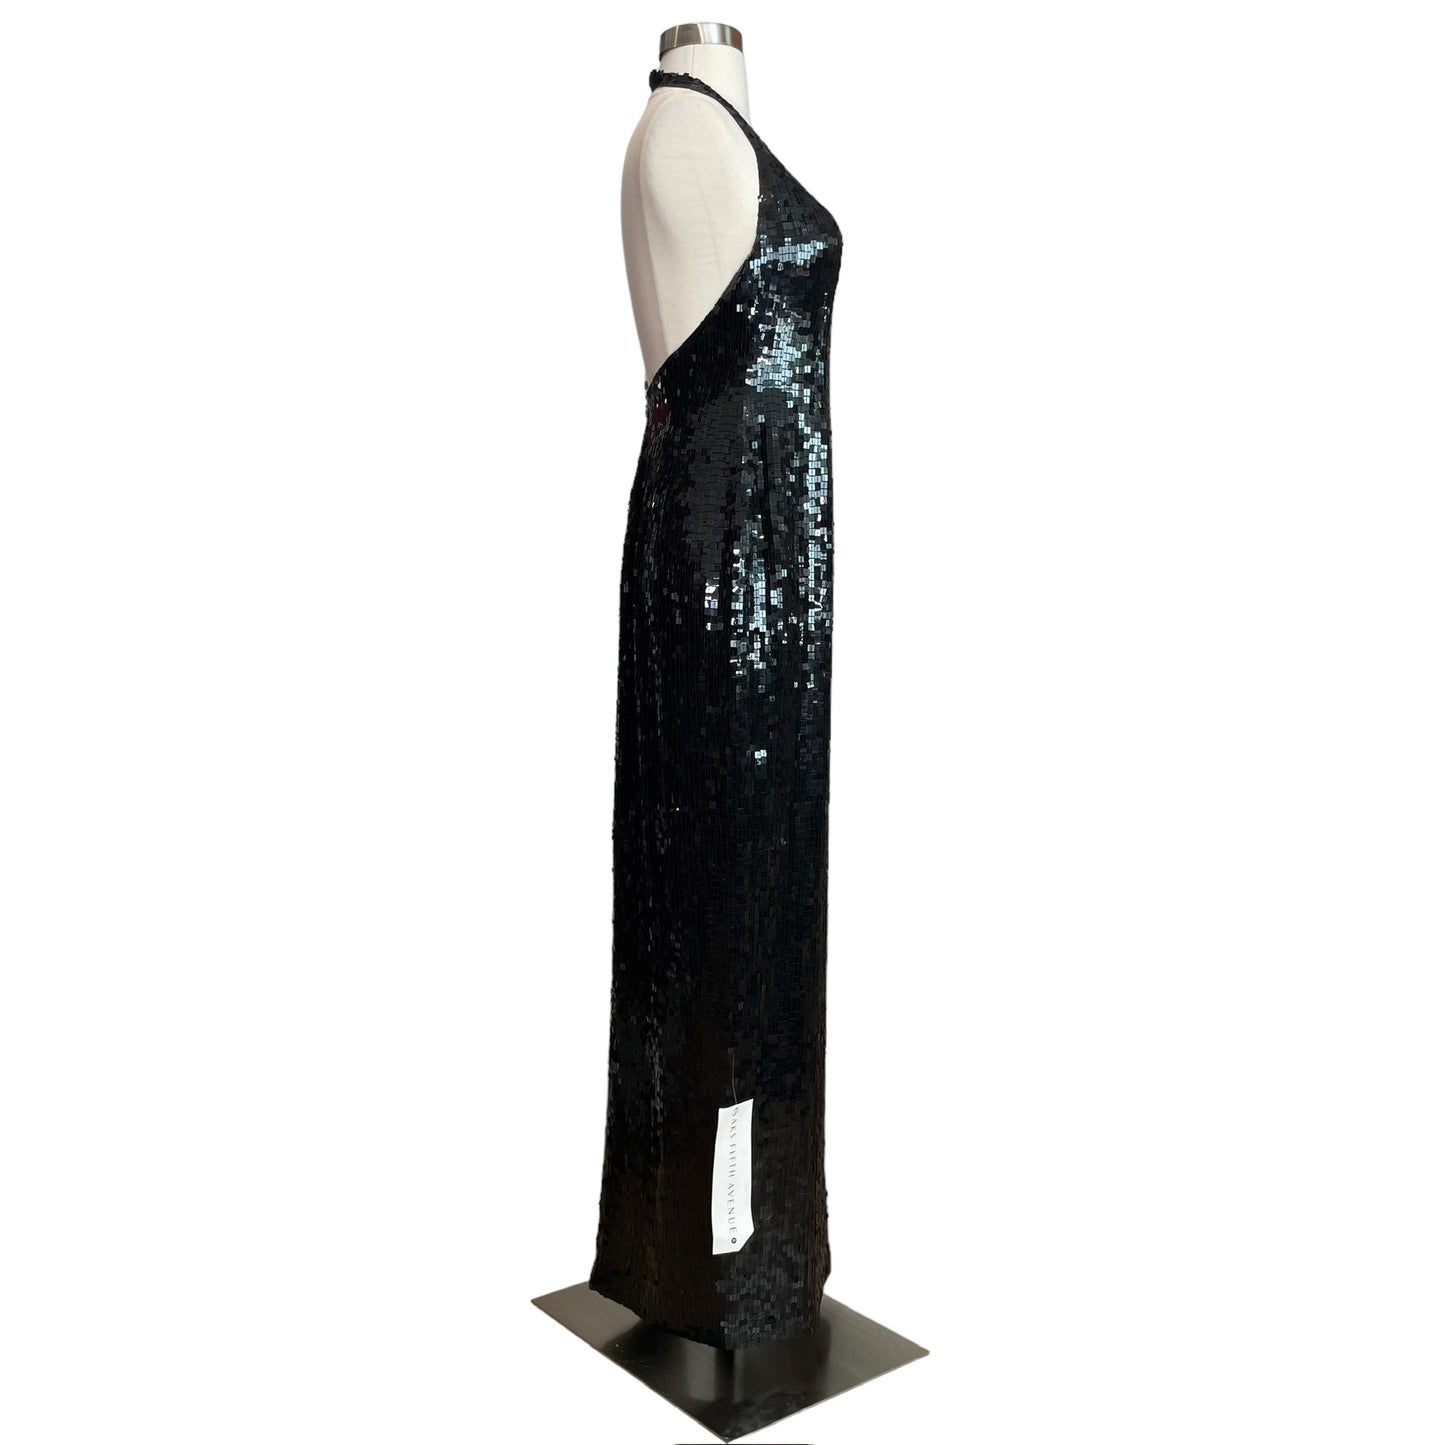 Black Sequin Halter Dress - 8